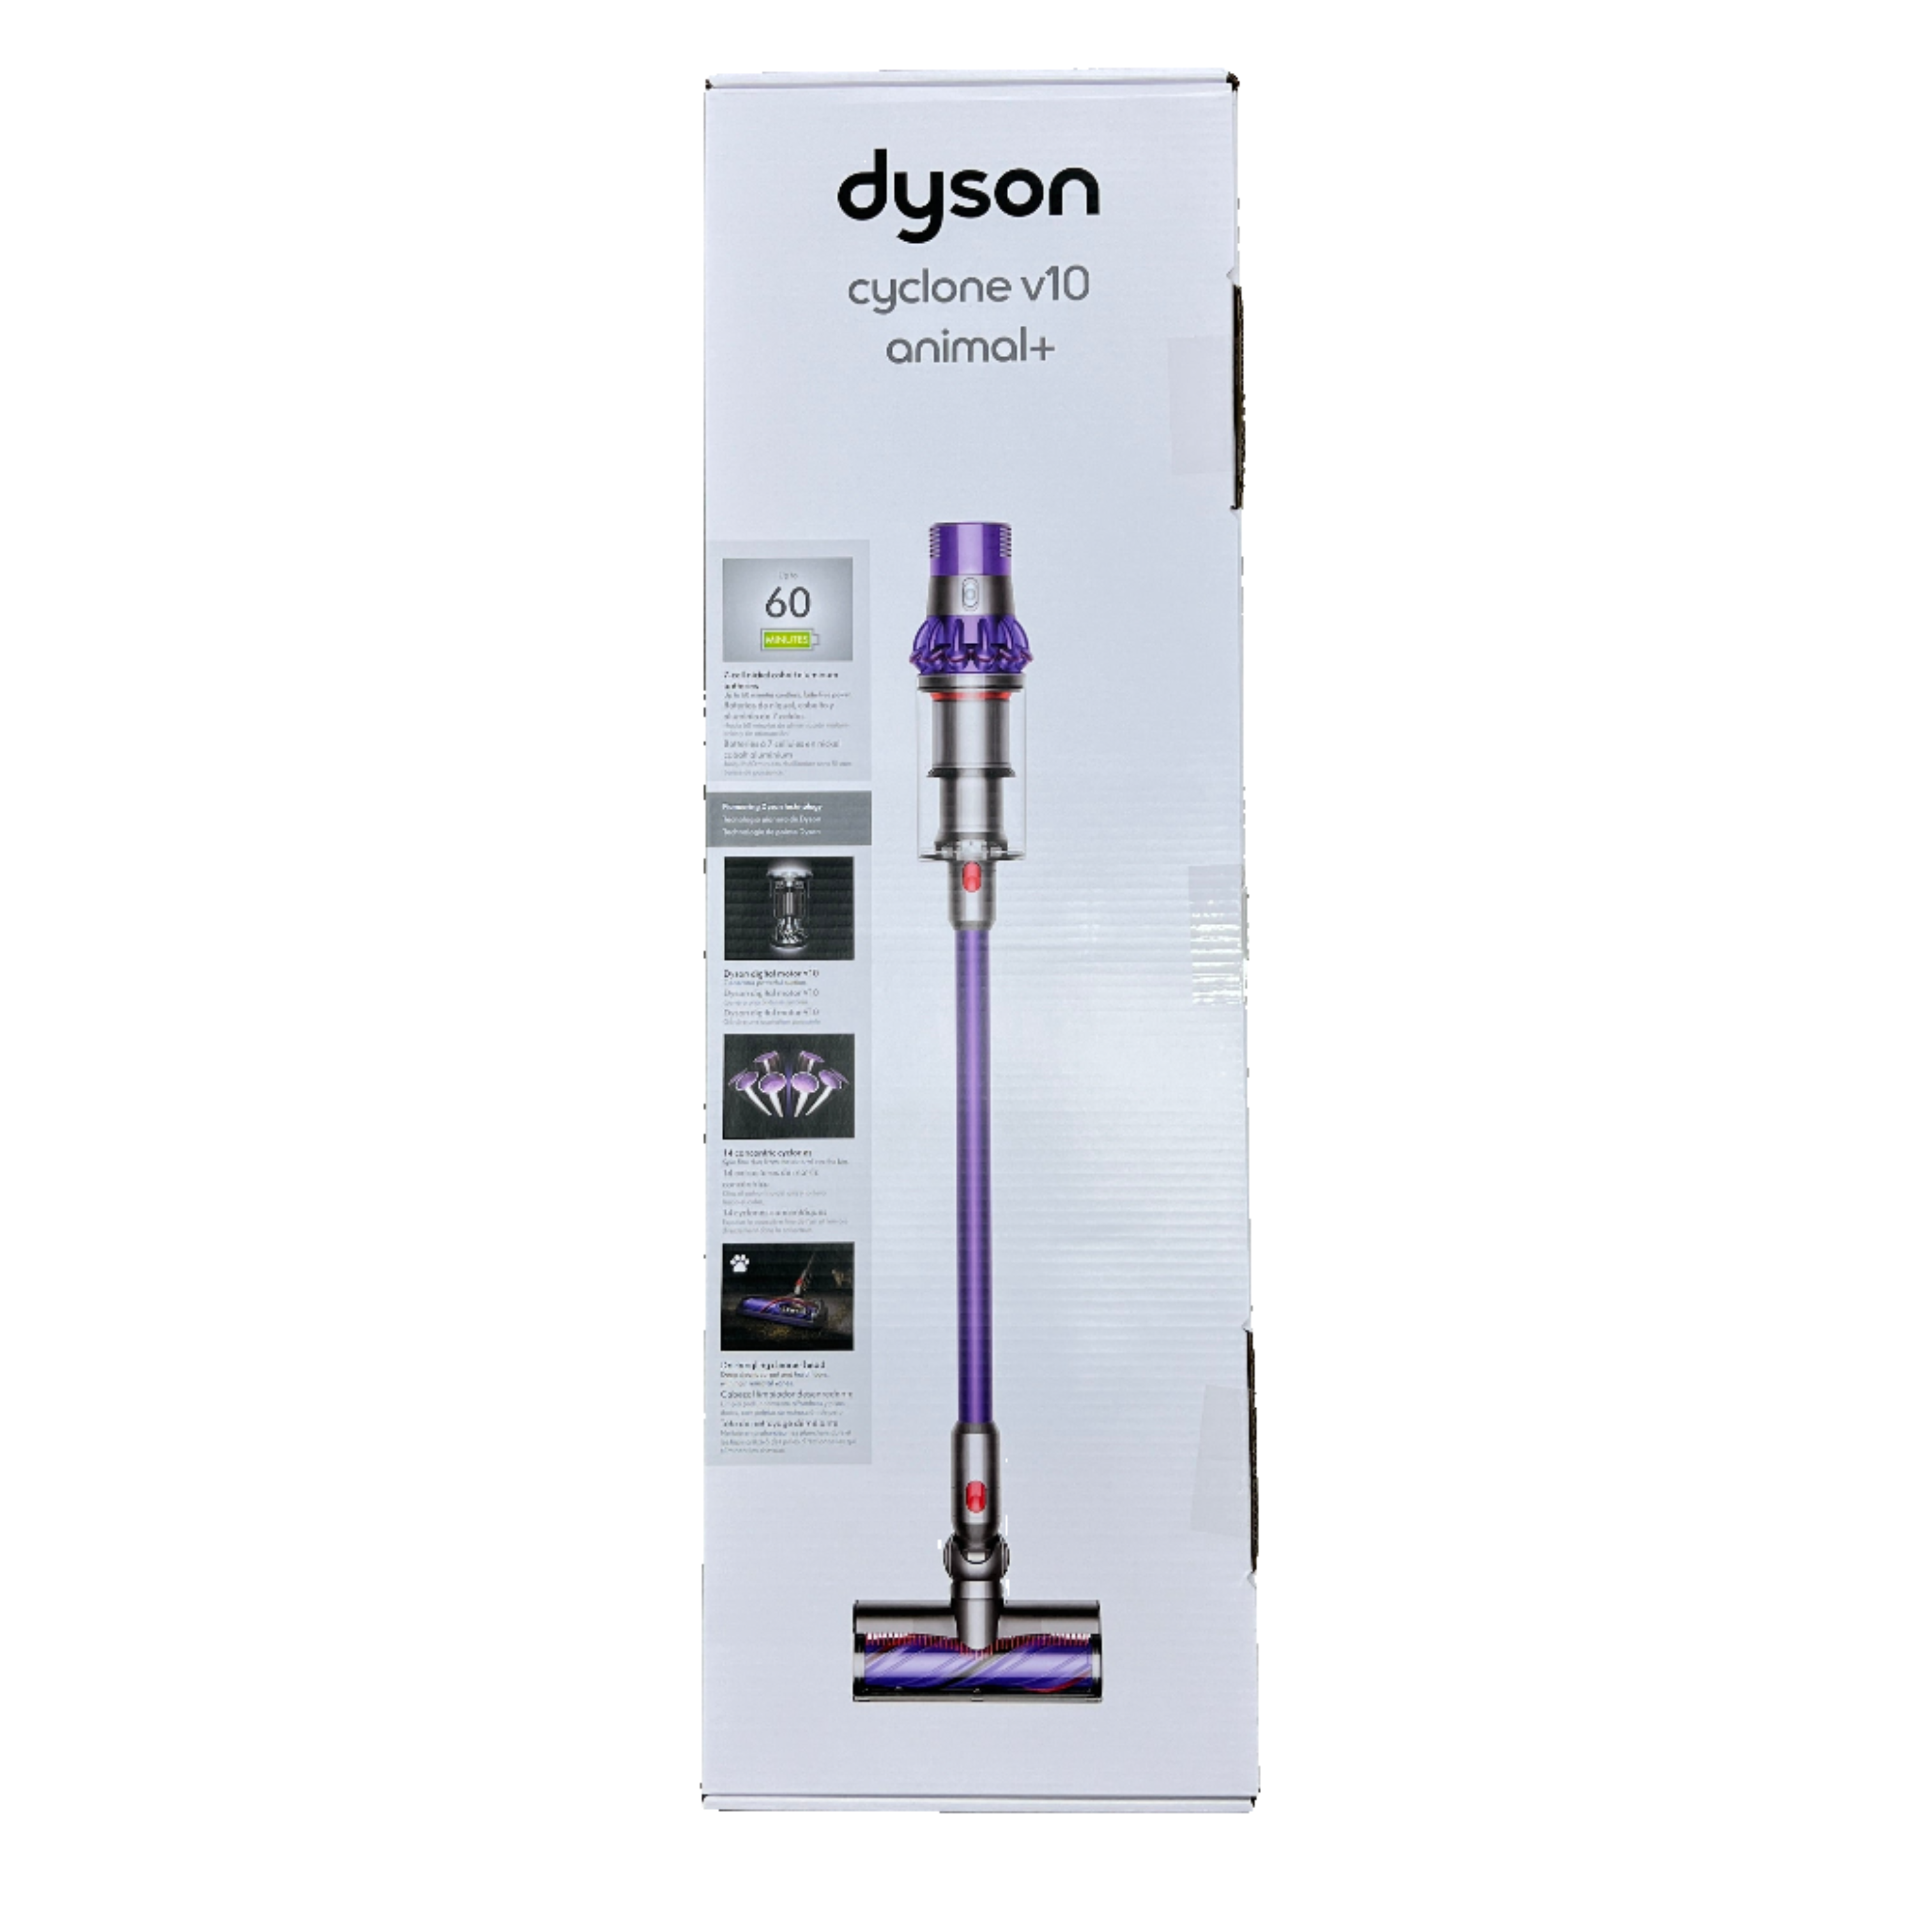 Dyson Vacuum "CYCLONE V10 ANIMAL+" New